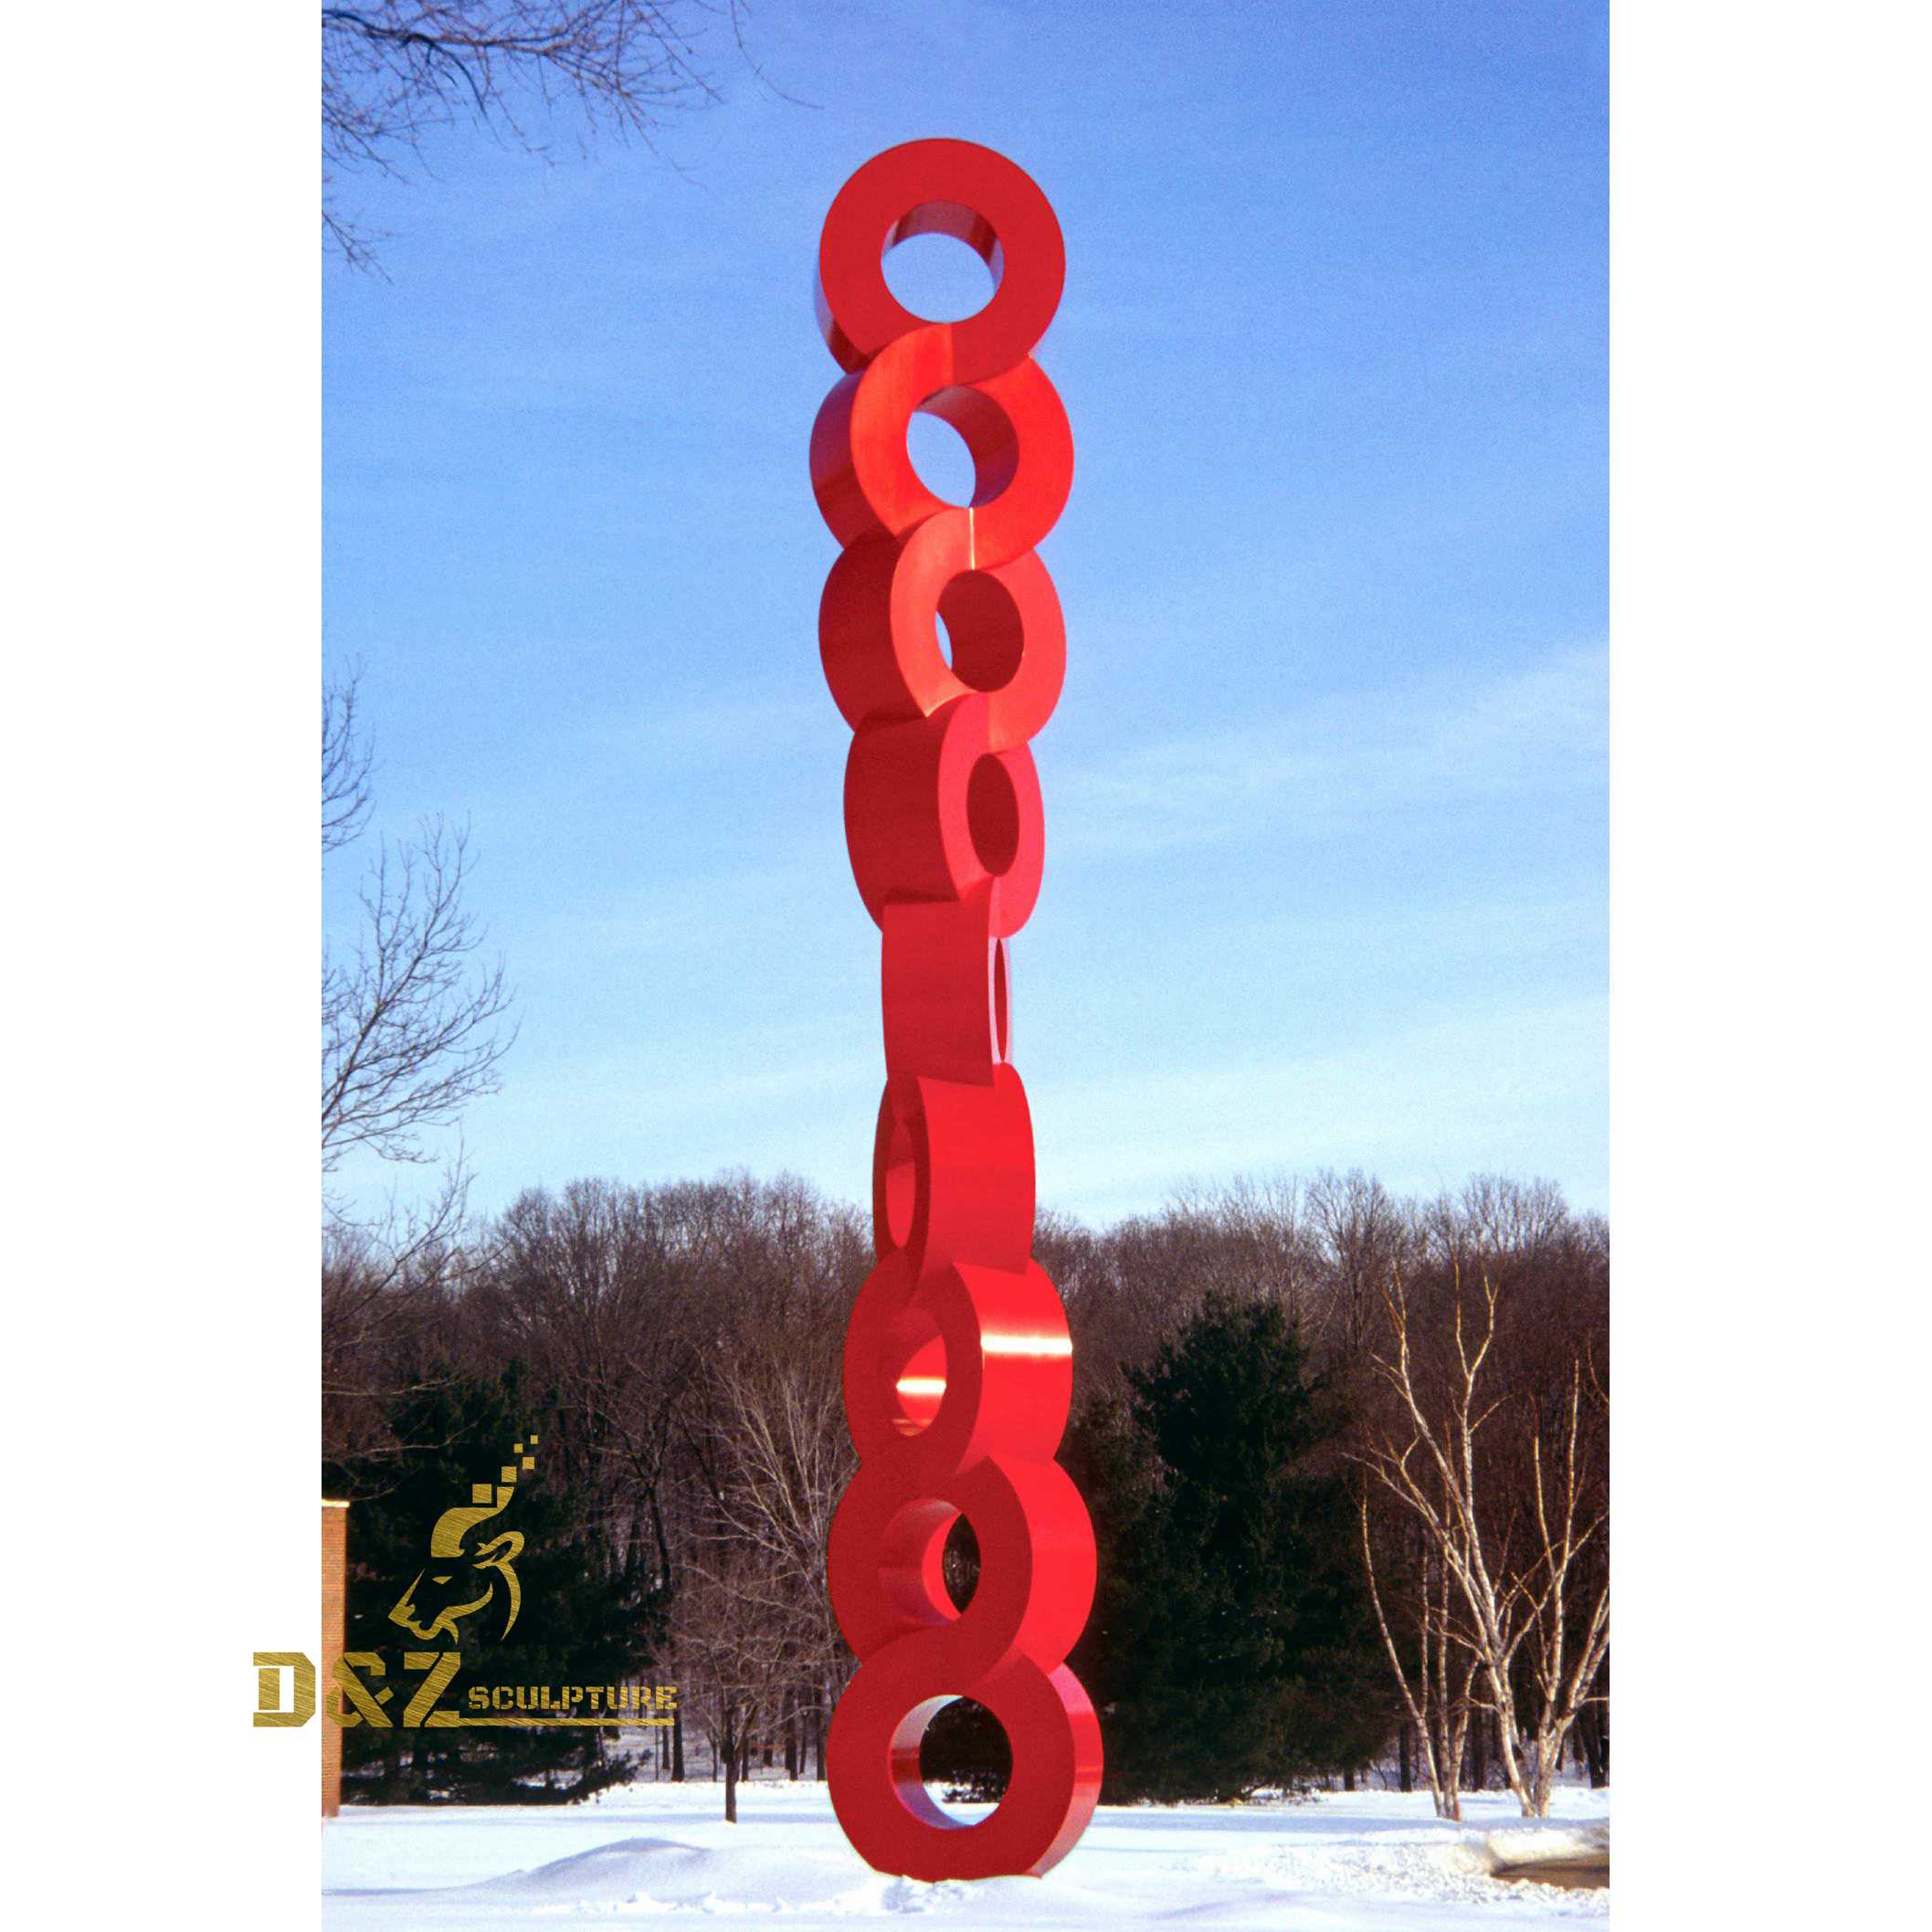 outdoor high rings sculpture